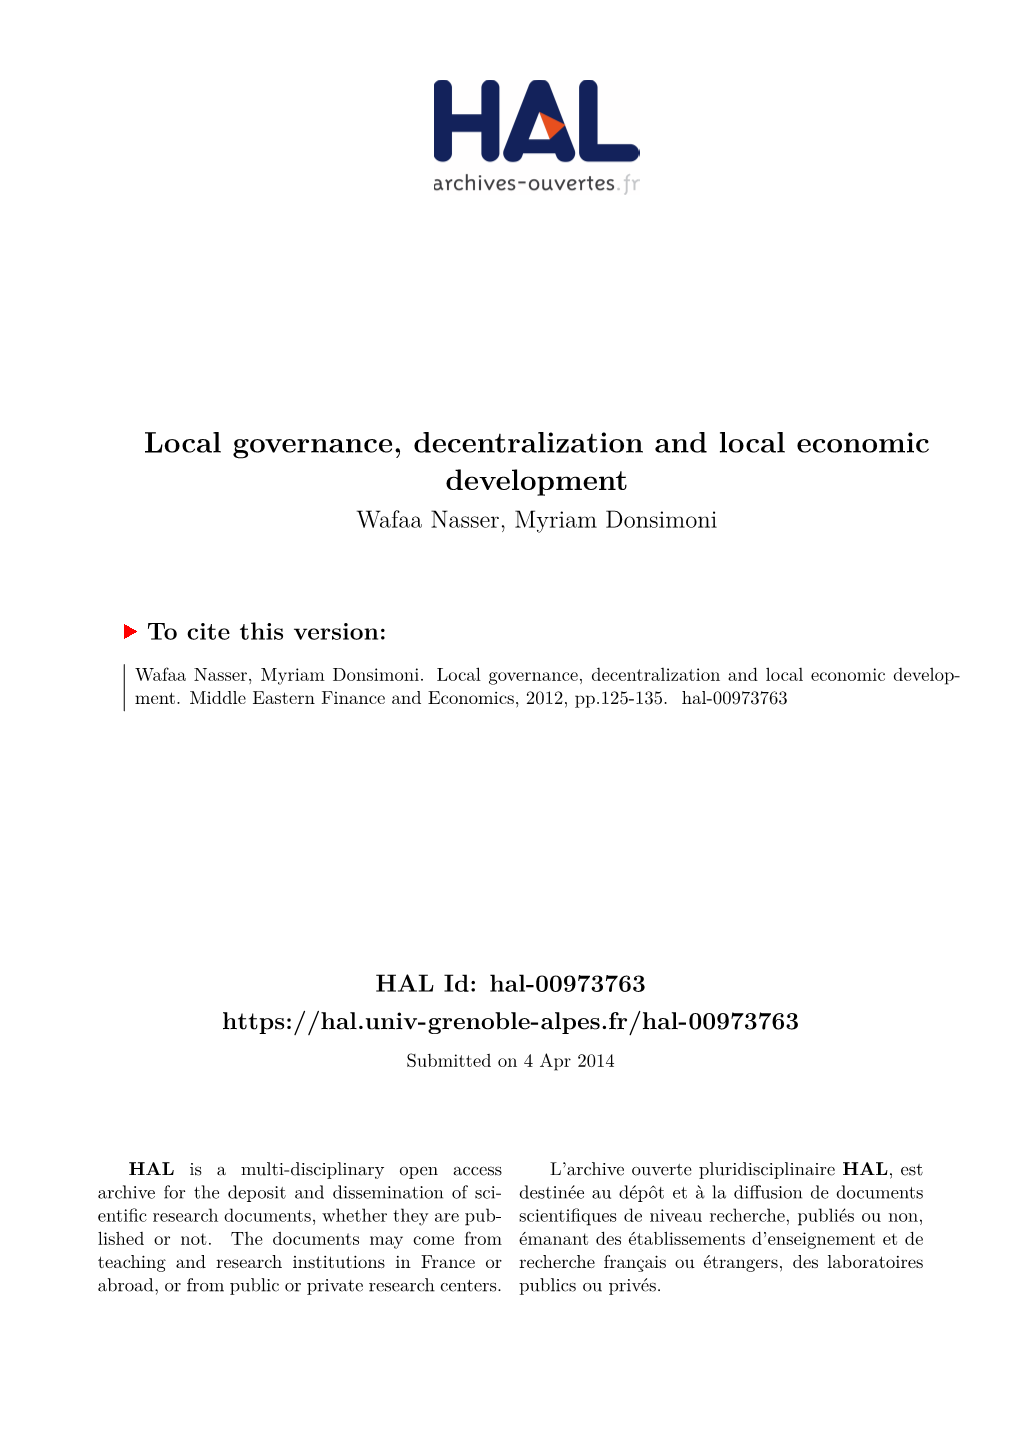 Local Governance, Decentralization and Local Economic Development Wafaa Nasser, Myriam Donsimoni